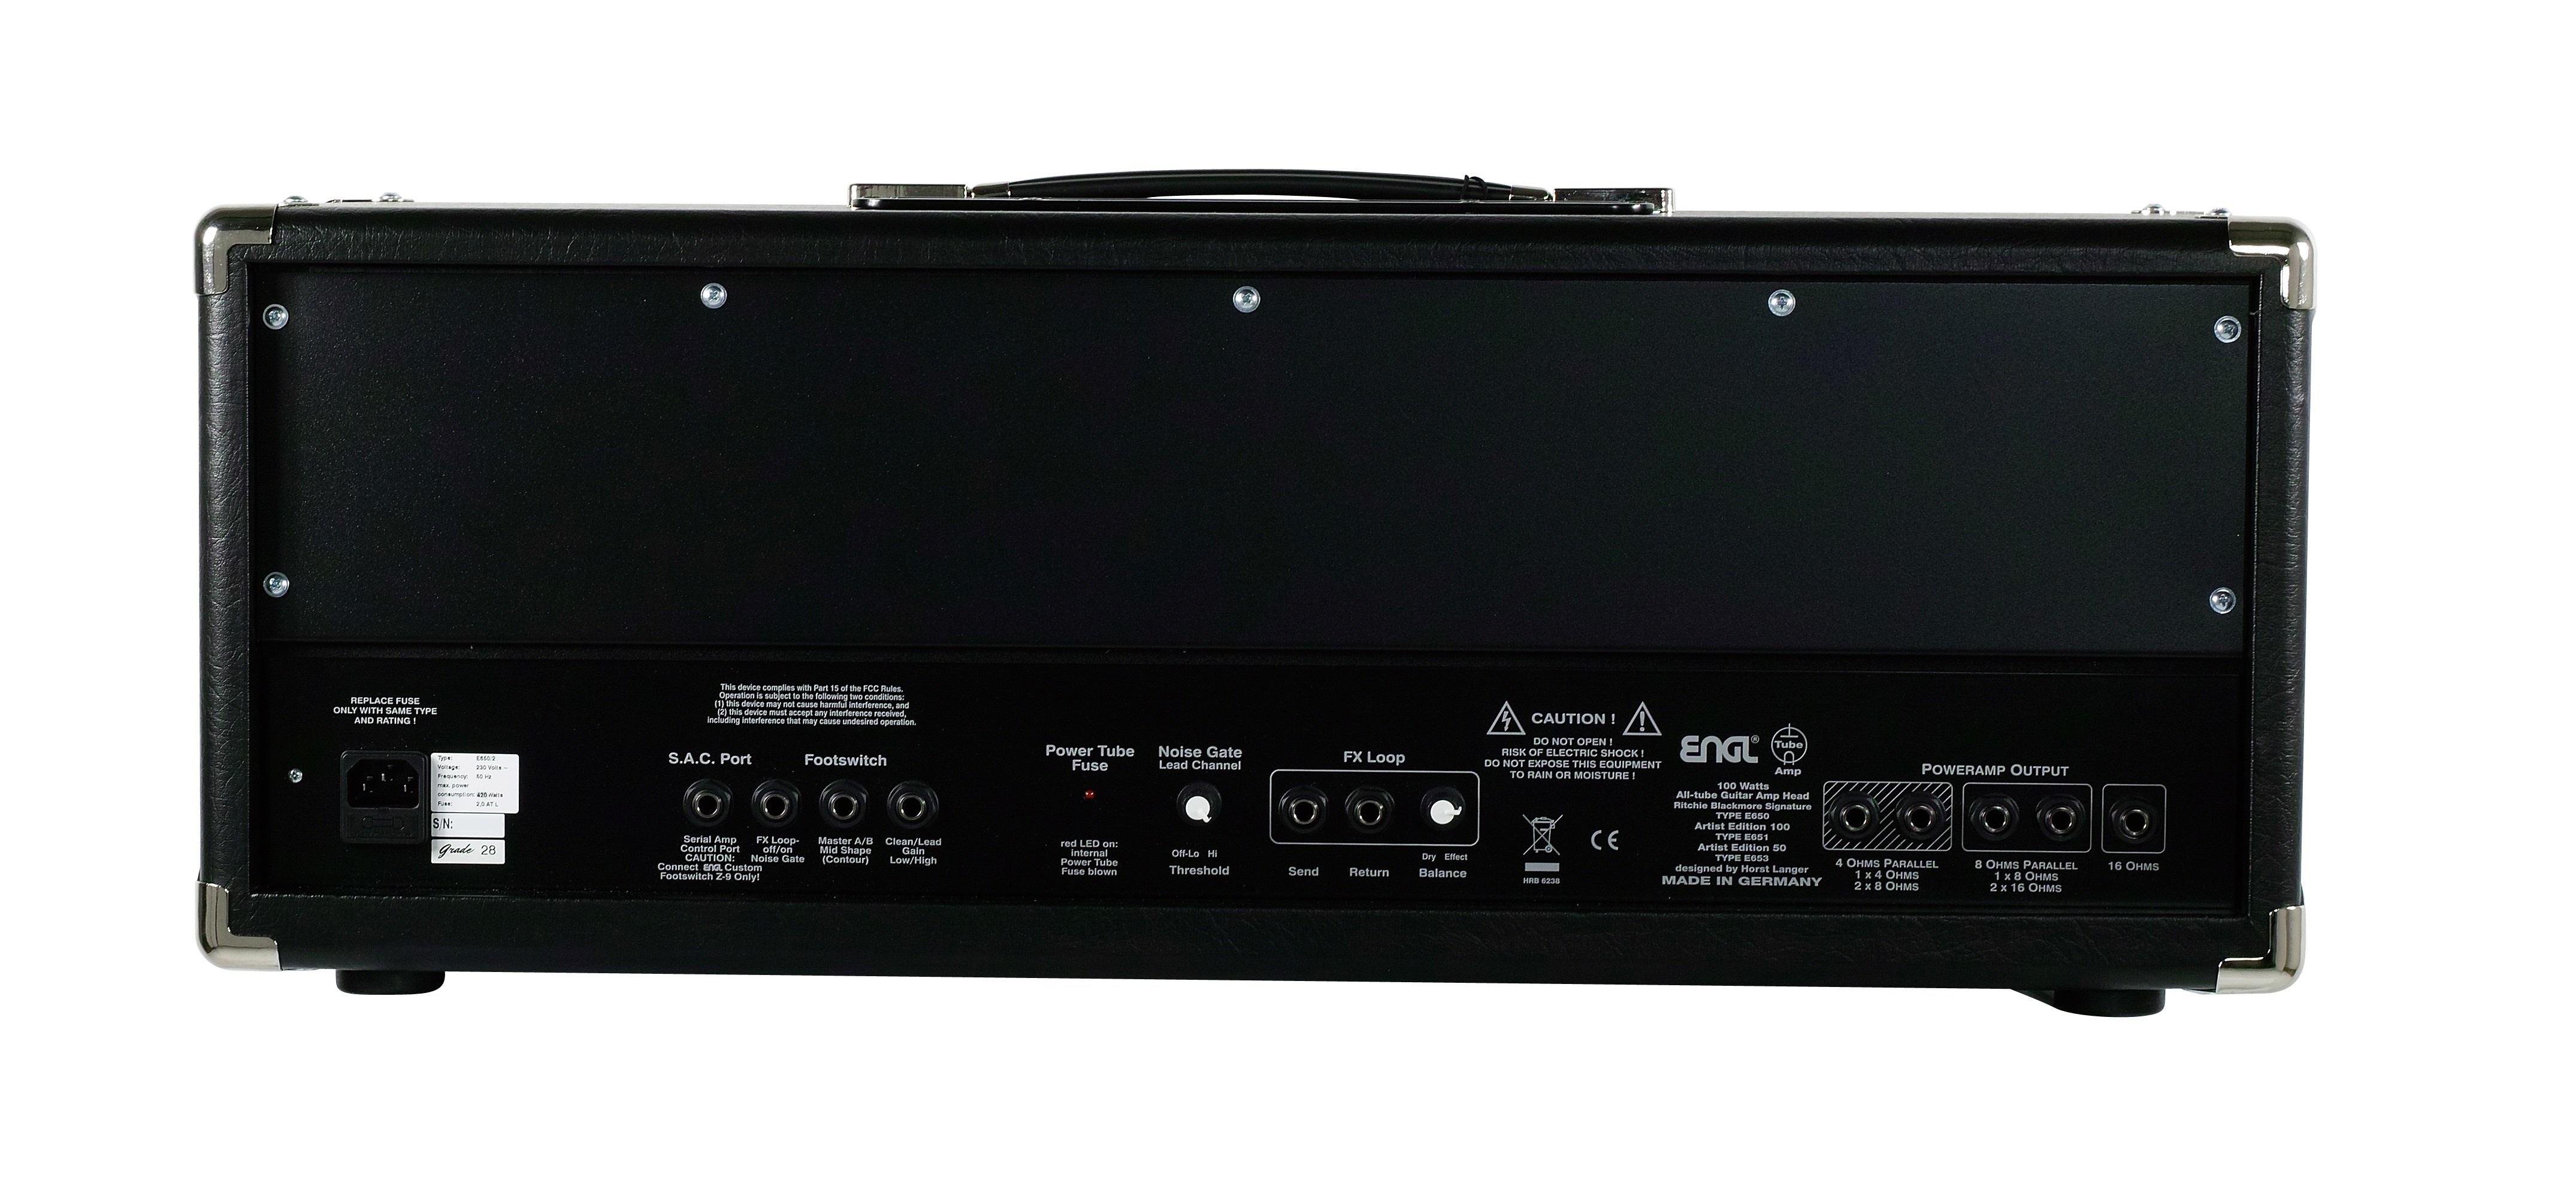 ENGL RITCHIE BLACKMORE SIGNATURE E650 HEAD V2 - HIENDGUITAR   ENGL amp